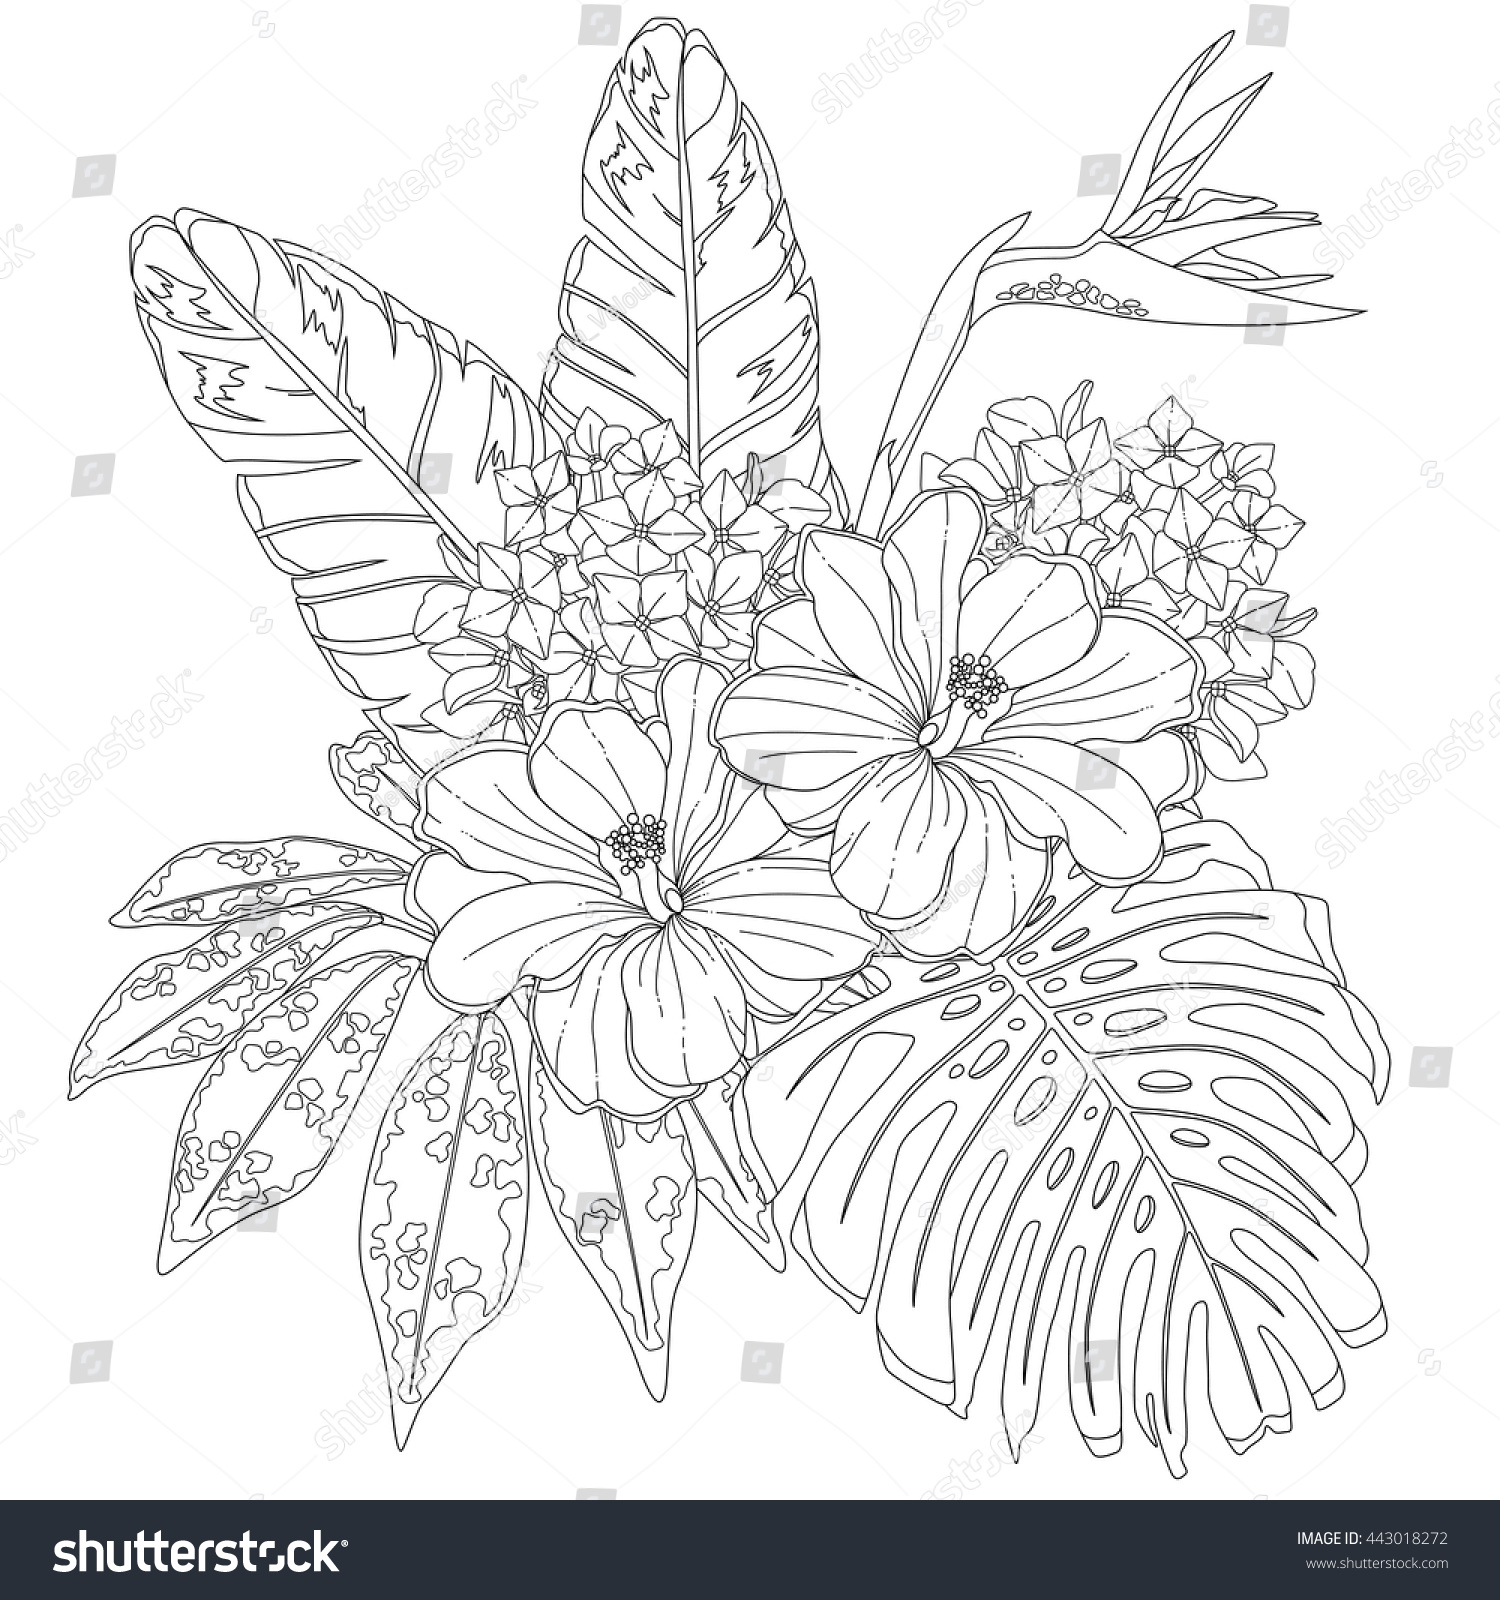 Tropical flowers leaves page coloring book stockvektor royaltyfri